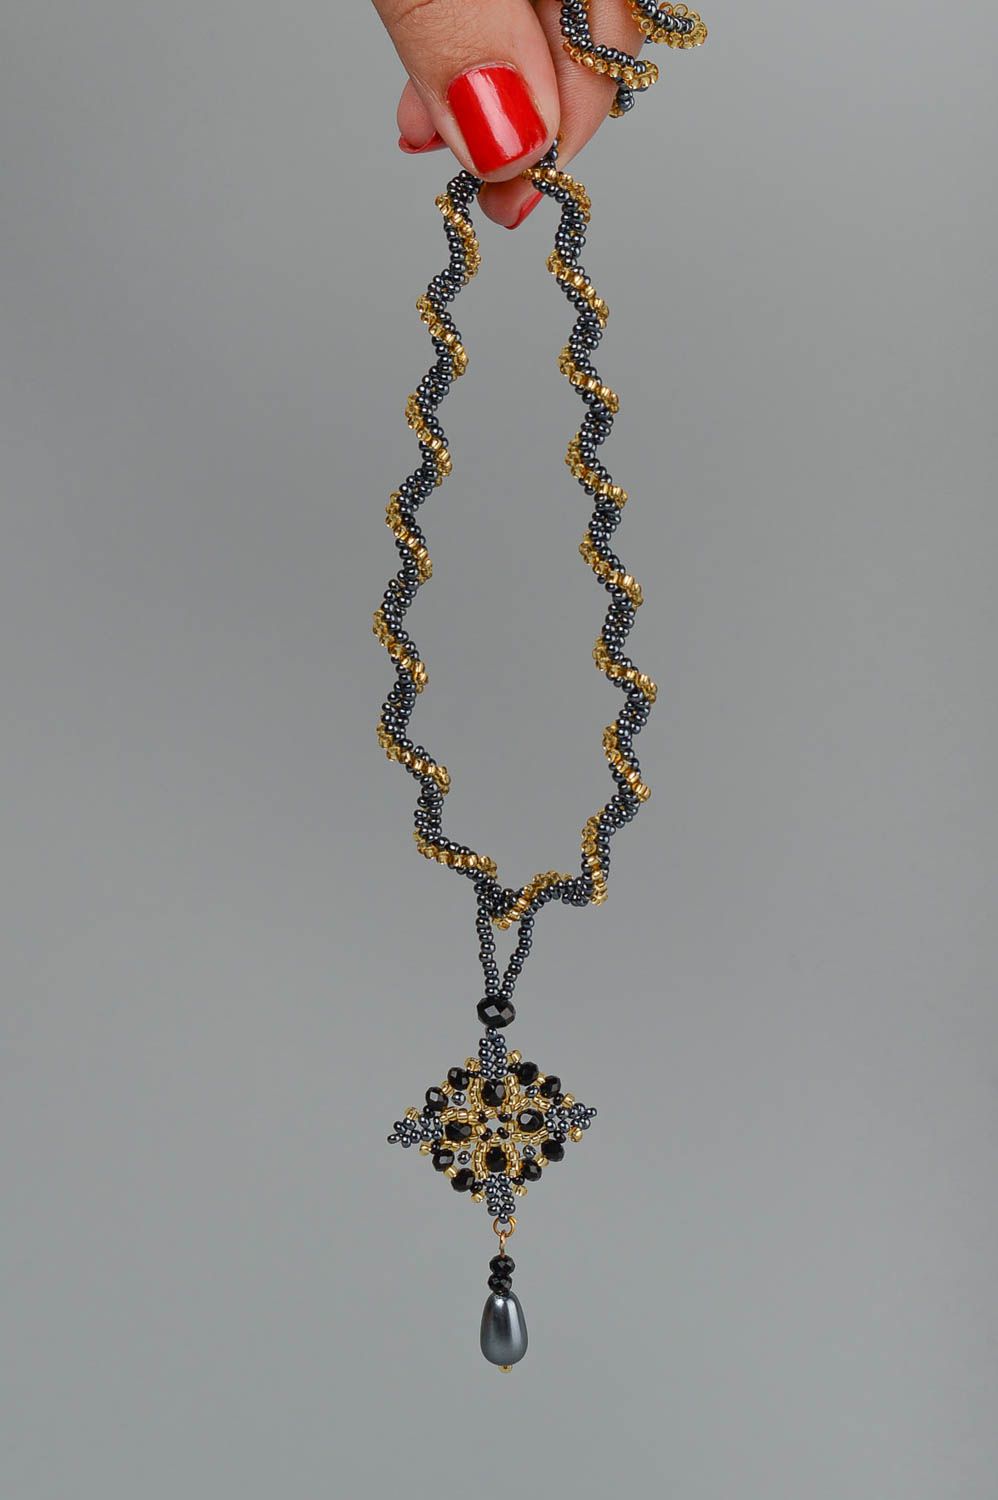 Handcraft necklace seed beads necklace designer accessories elegant bijouterie photo 5